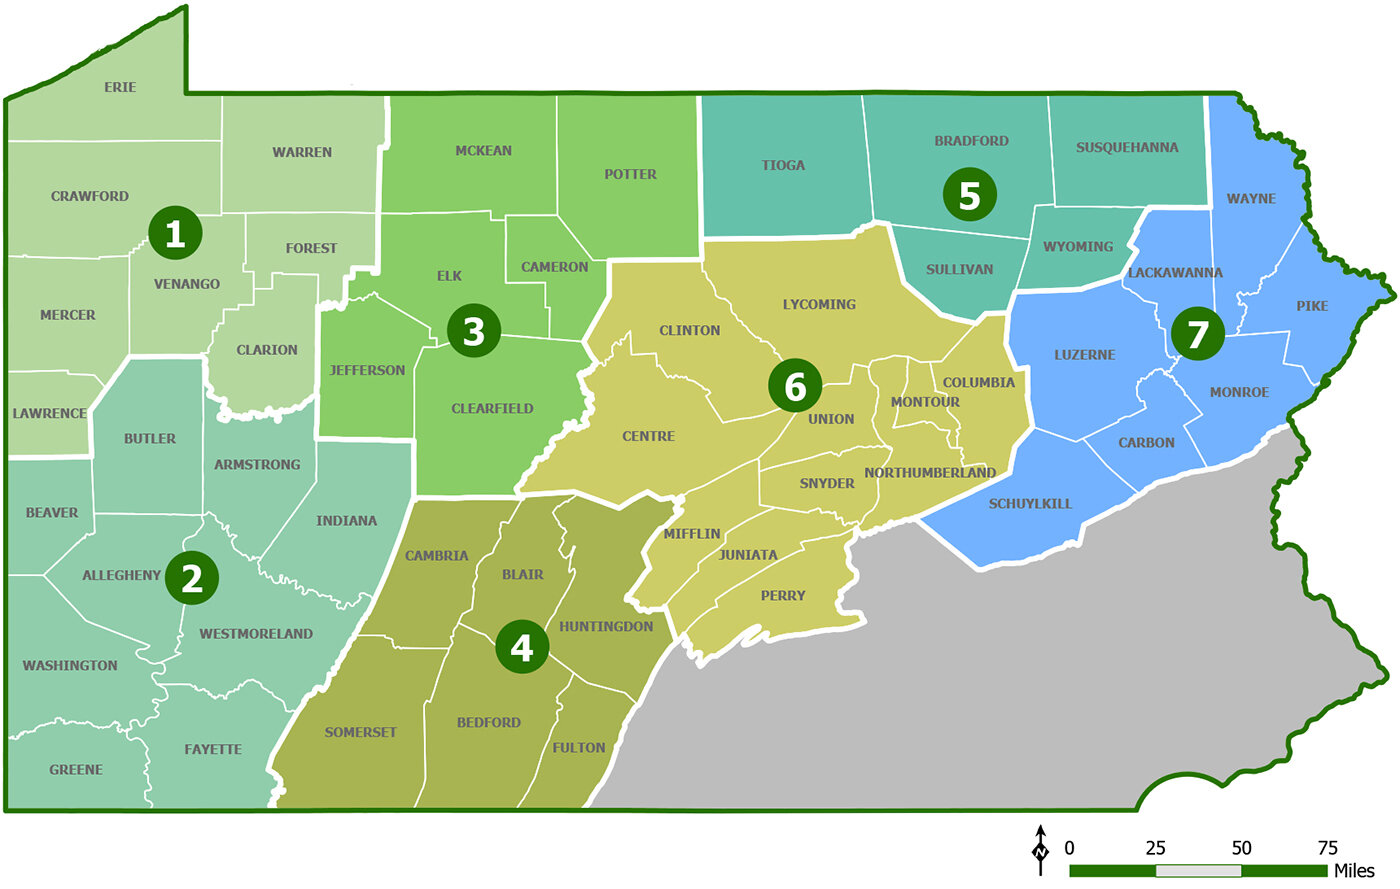 Pennsylvania Local Development Districts